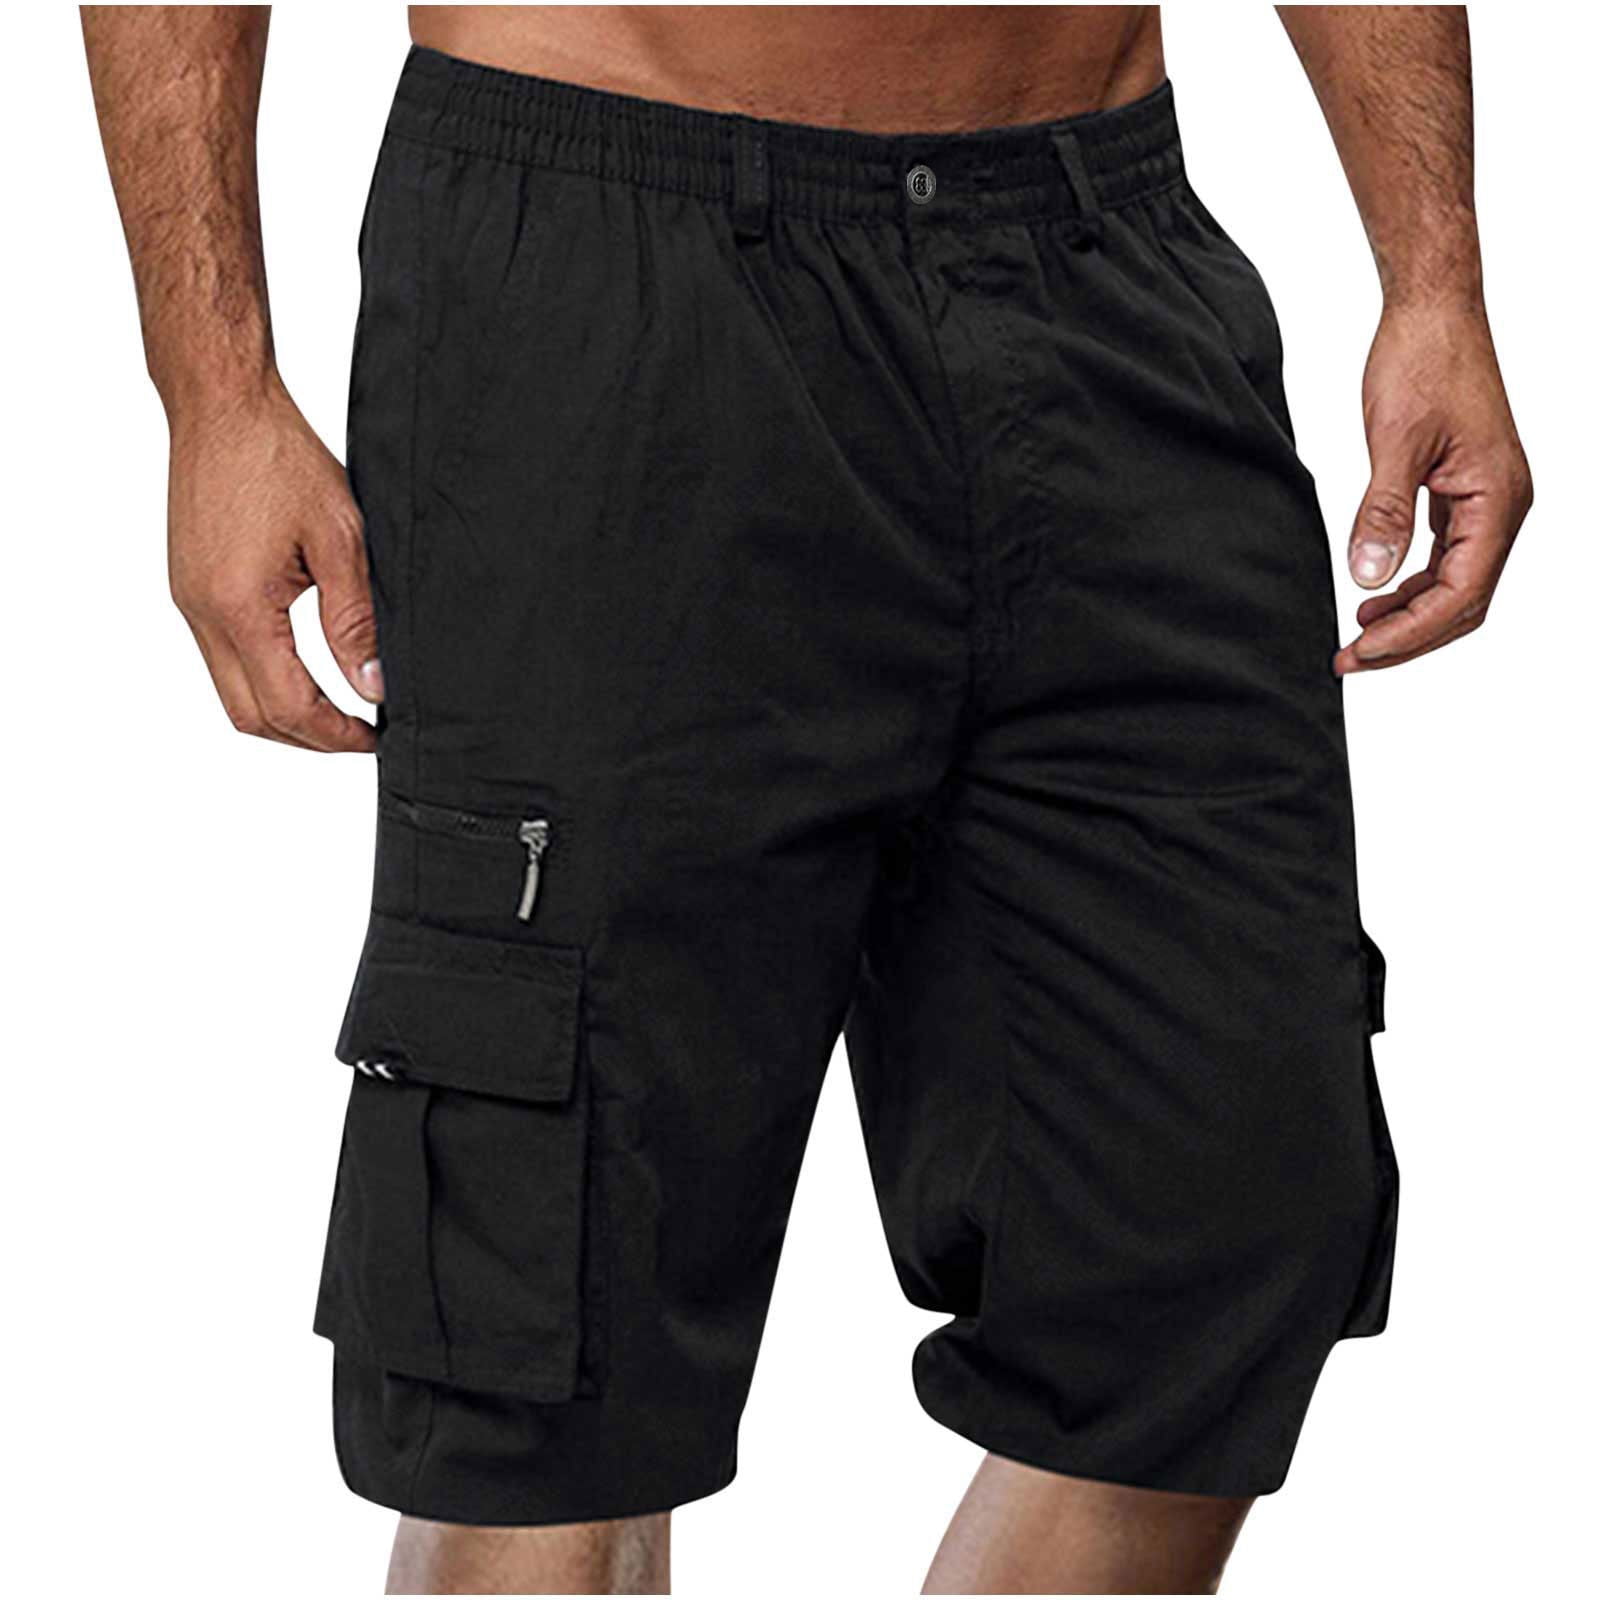 Mens Cargo Shorts Fashion Solid Overalls Zipper Shorts Outdoors Pocket Shorts Workout Shorts Casual Pants 11 Inseam 